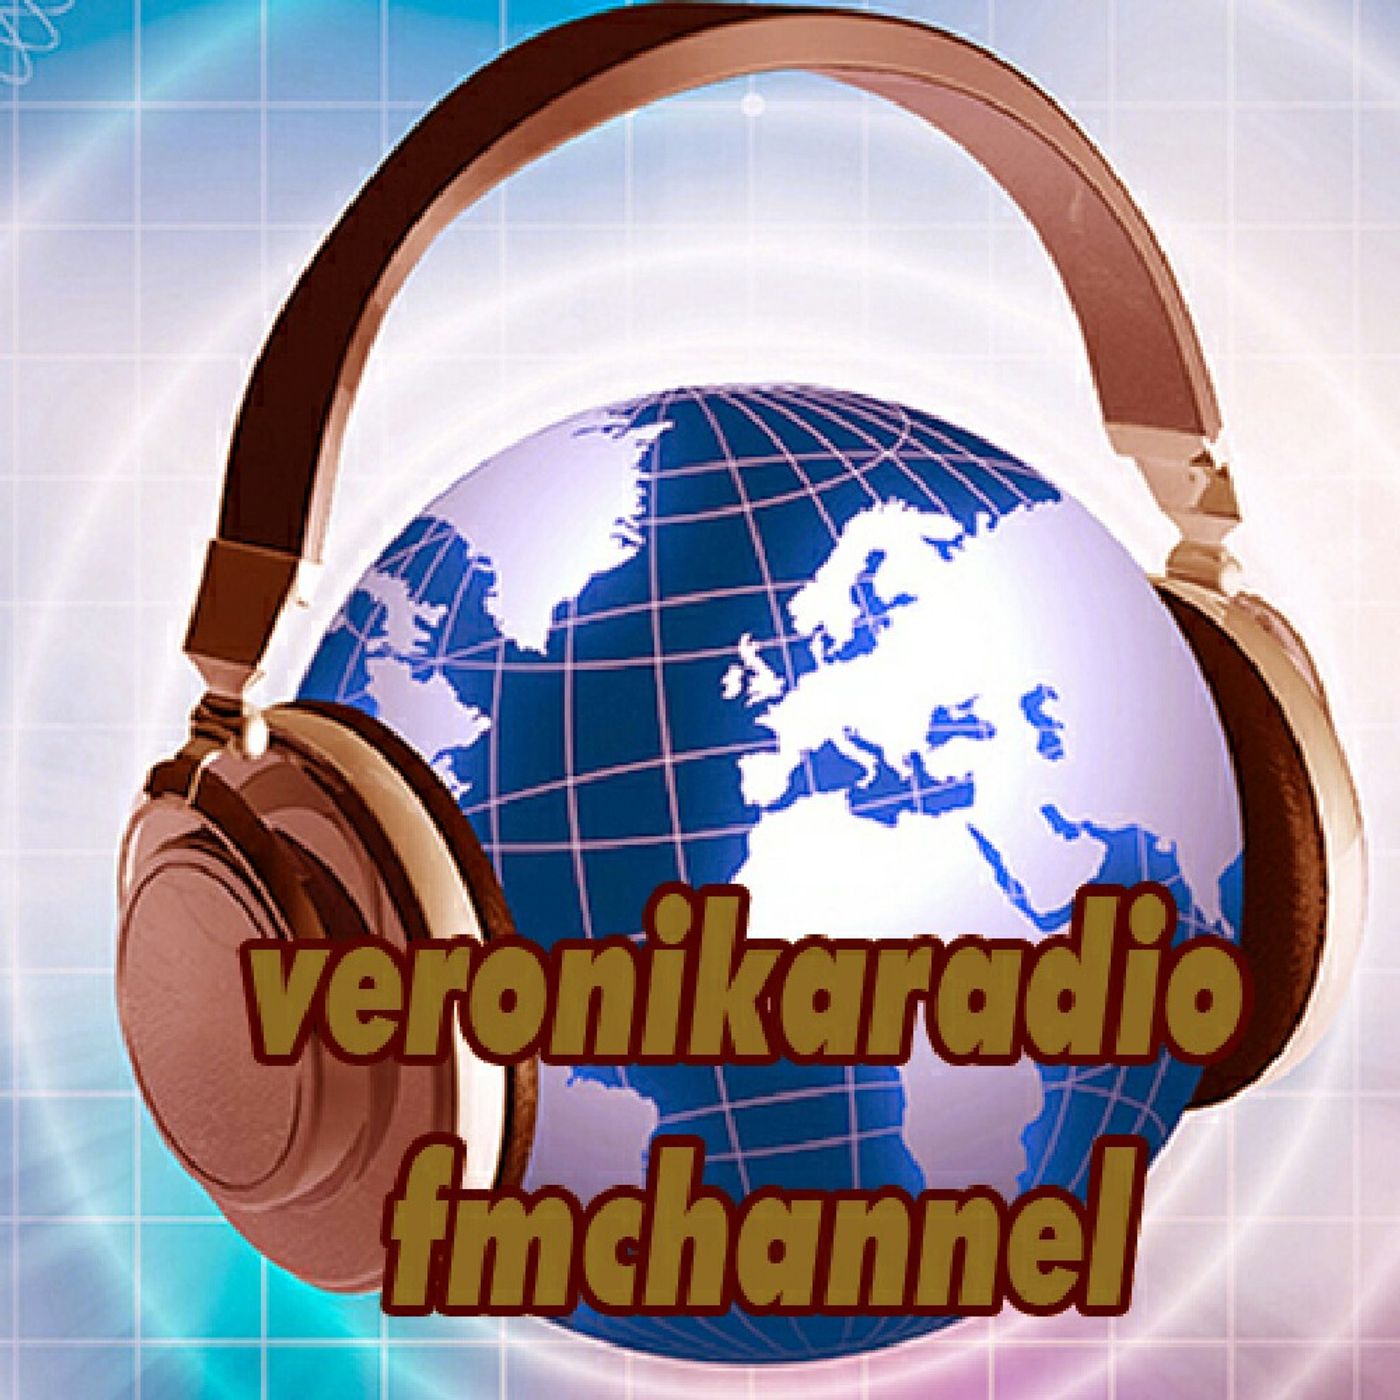 Veronikaradio Fmchannel'